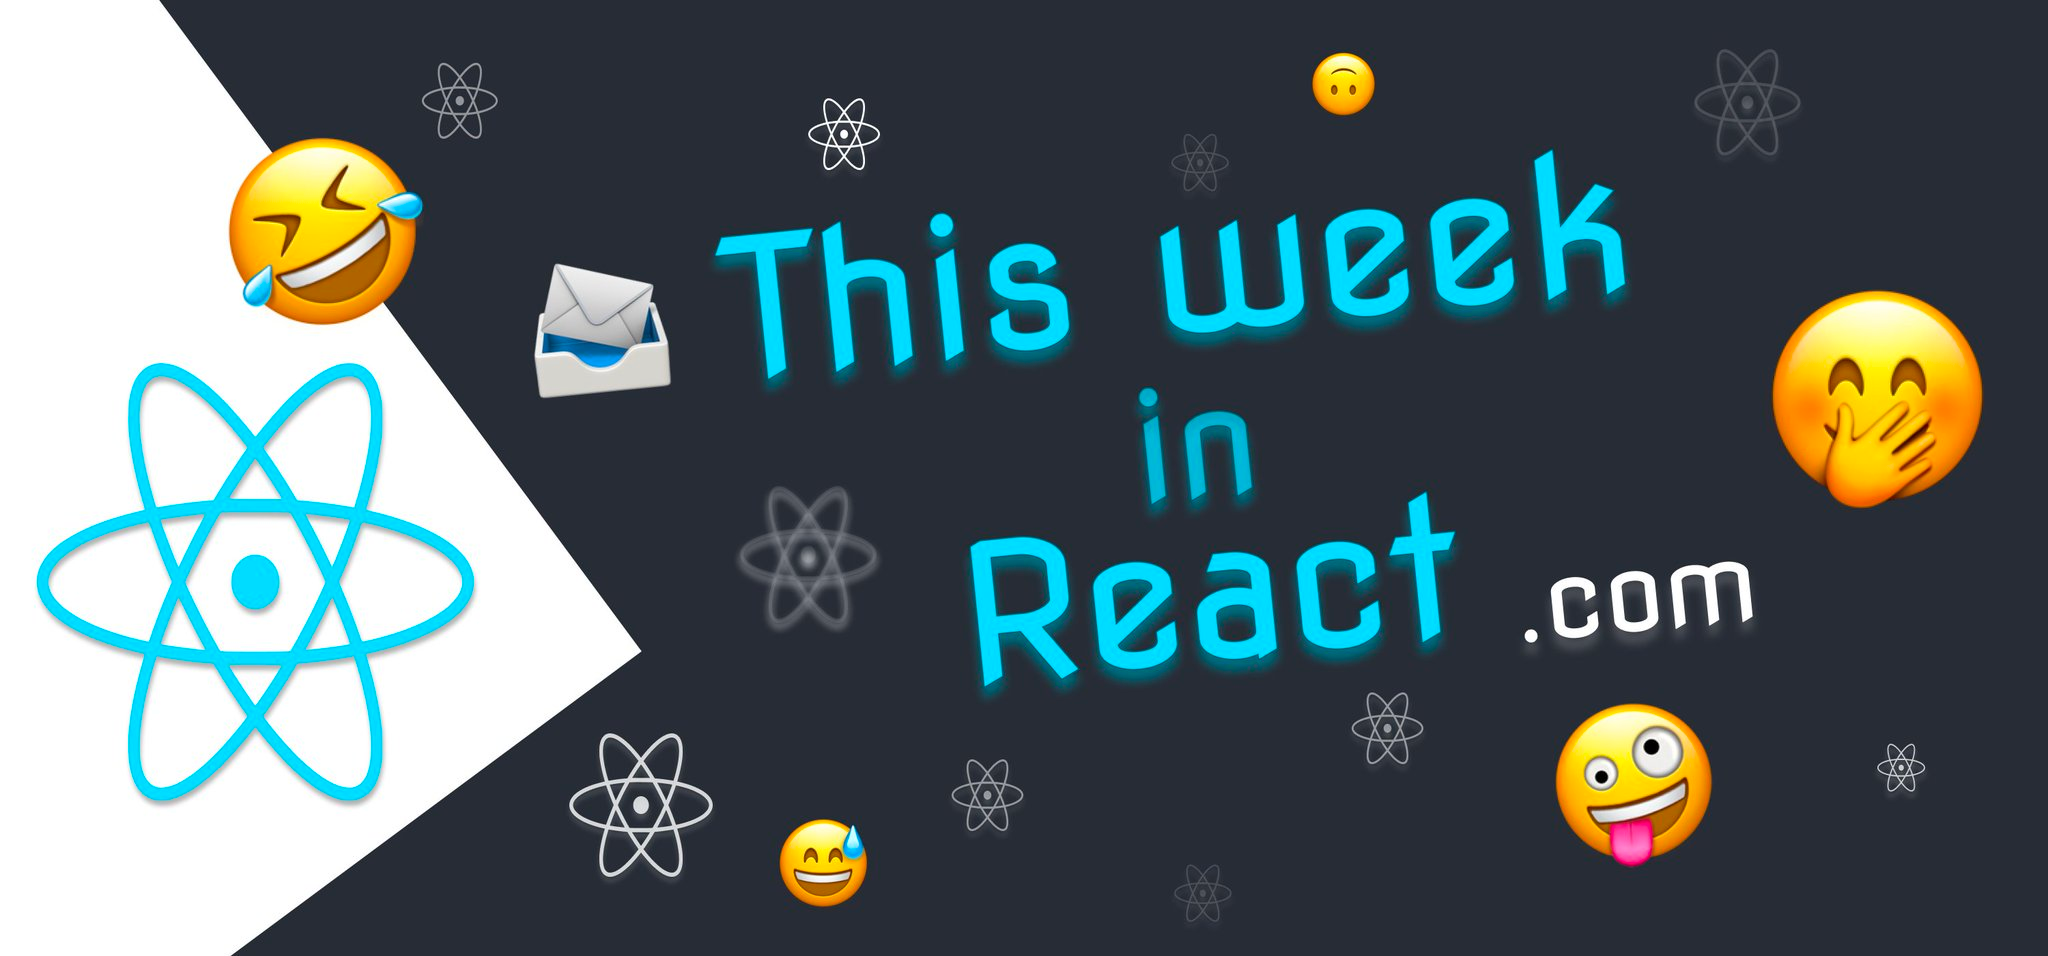 This Week In React - Fun Thread